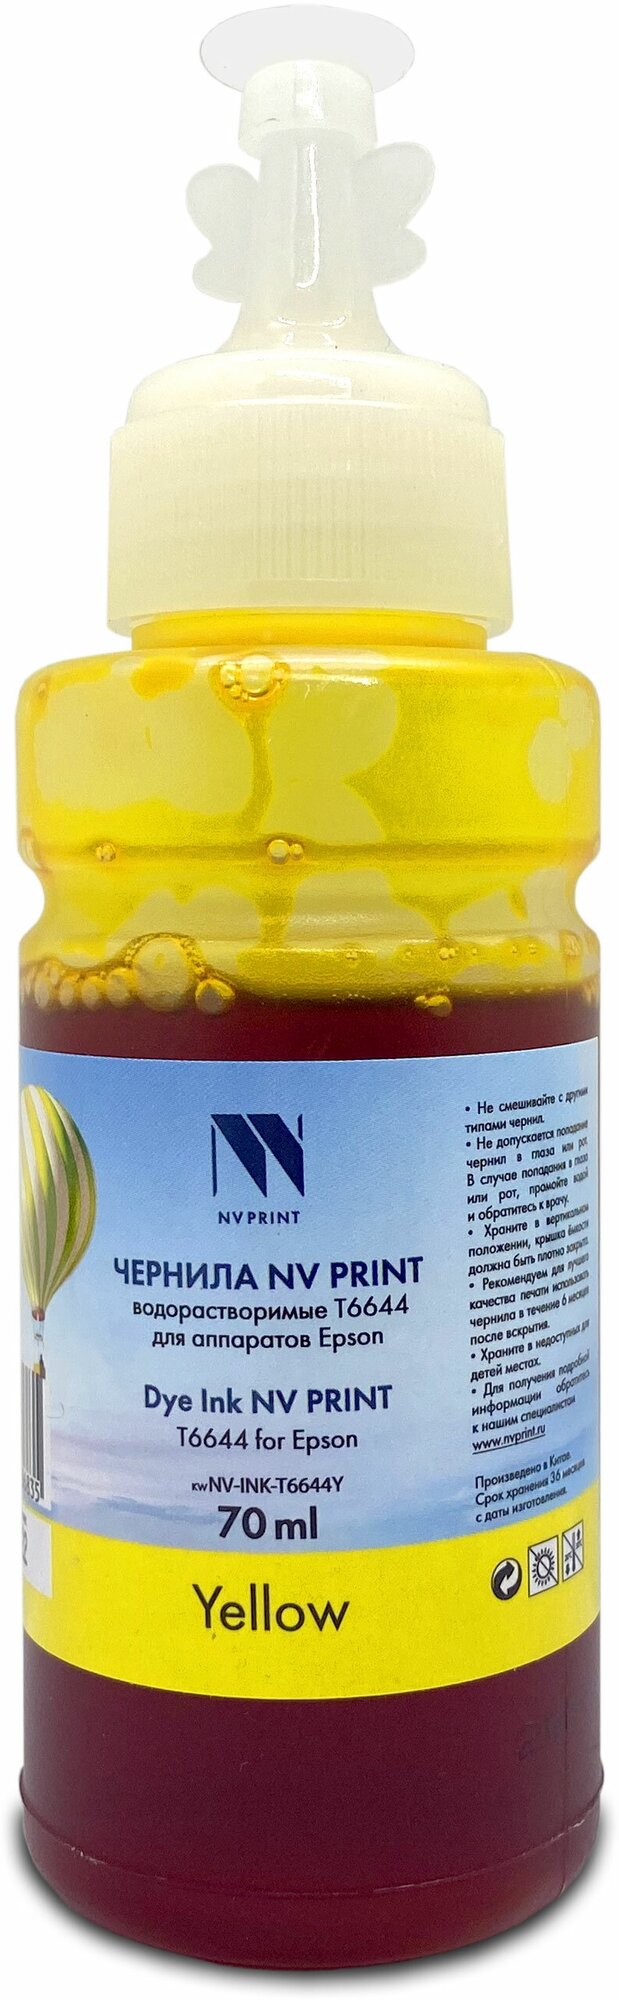 Чернила NV PRINT водорастворимые T6644 для аппаратов Epson (70 ml) Yellow